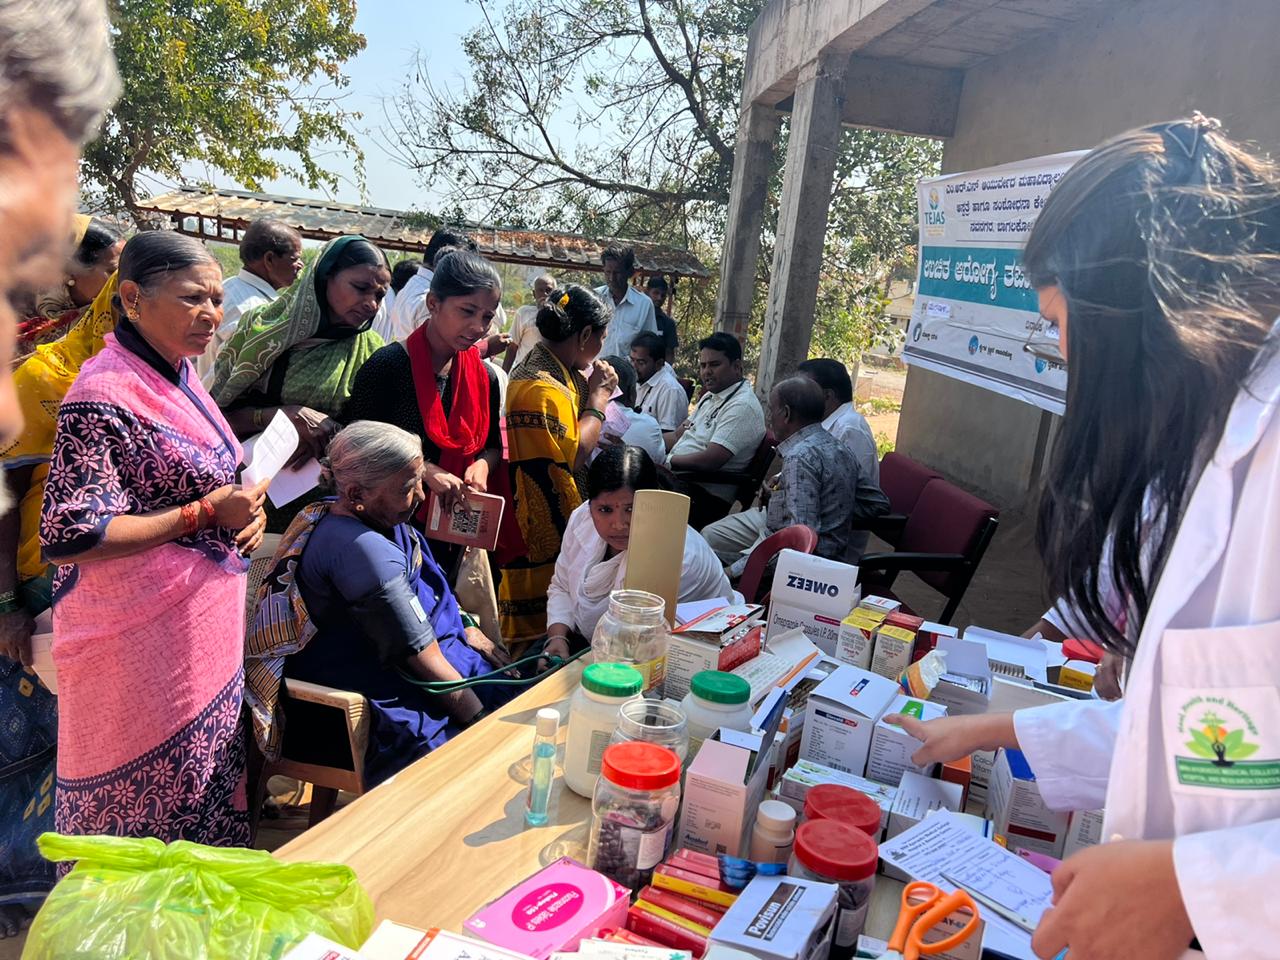 Free Health check-up Camp: ಮುರನಾಳ ಪು. ಕೆ ಗ್ರಾಮದಲ್ಲಿ ಉಚಿತ ಆರೋಗ್ಯ ತಪಾಸಣಾ ಶಿಬಿರ